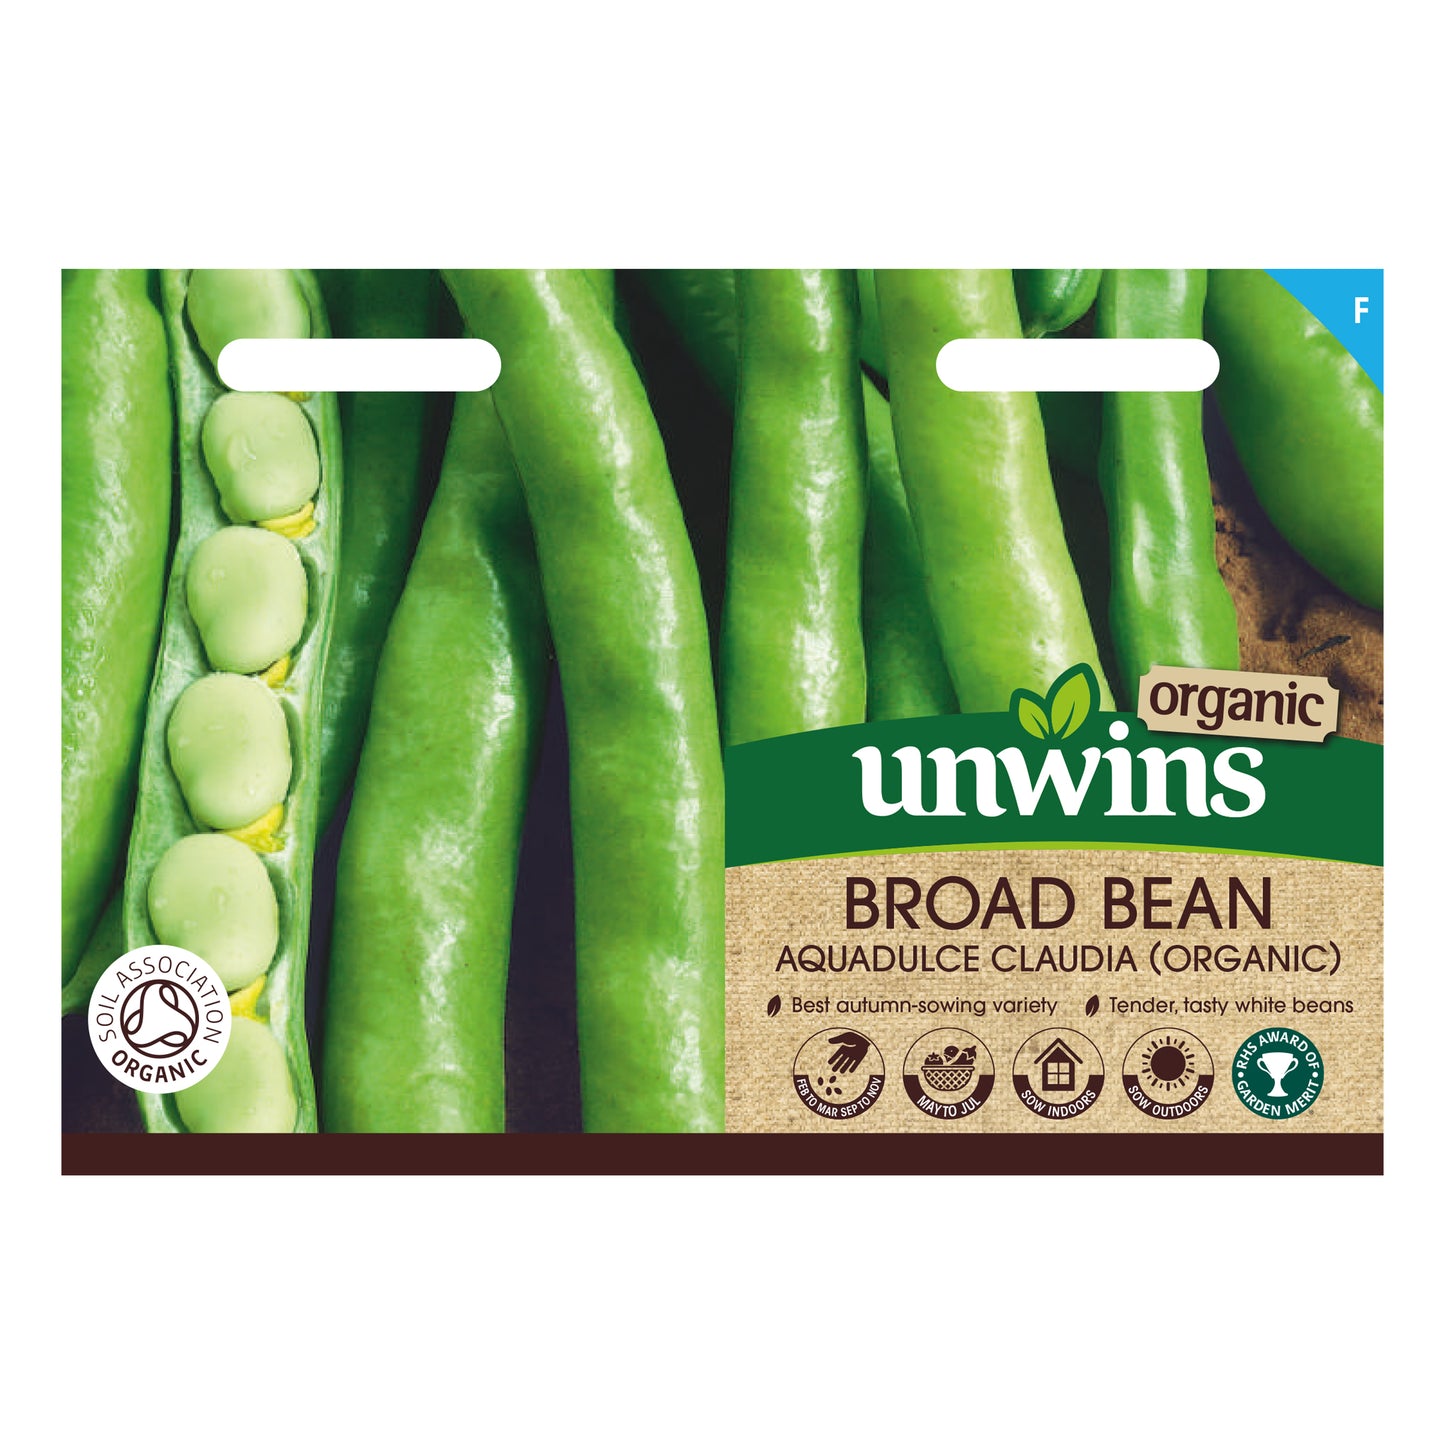 Unwins Organic Broad Bean Aquadulce Claudia Seeds Front